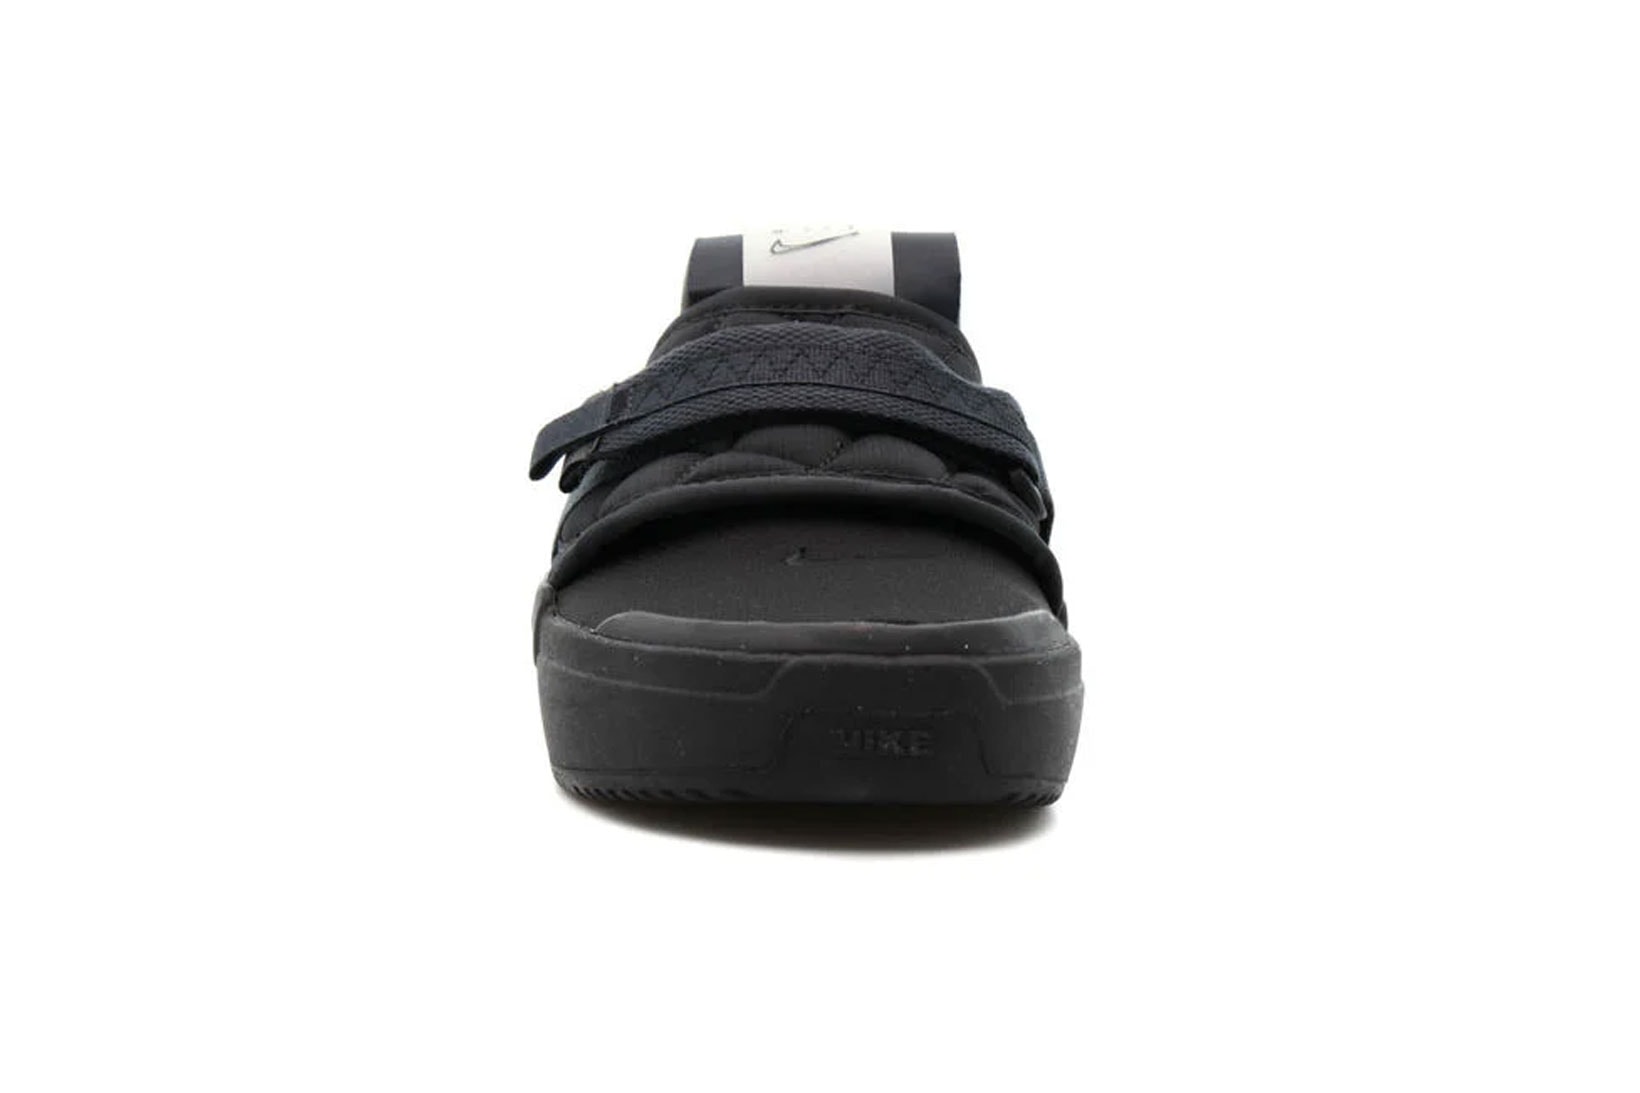 nike offline mules slip on slides triple black off noir front toe sole straps logo